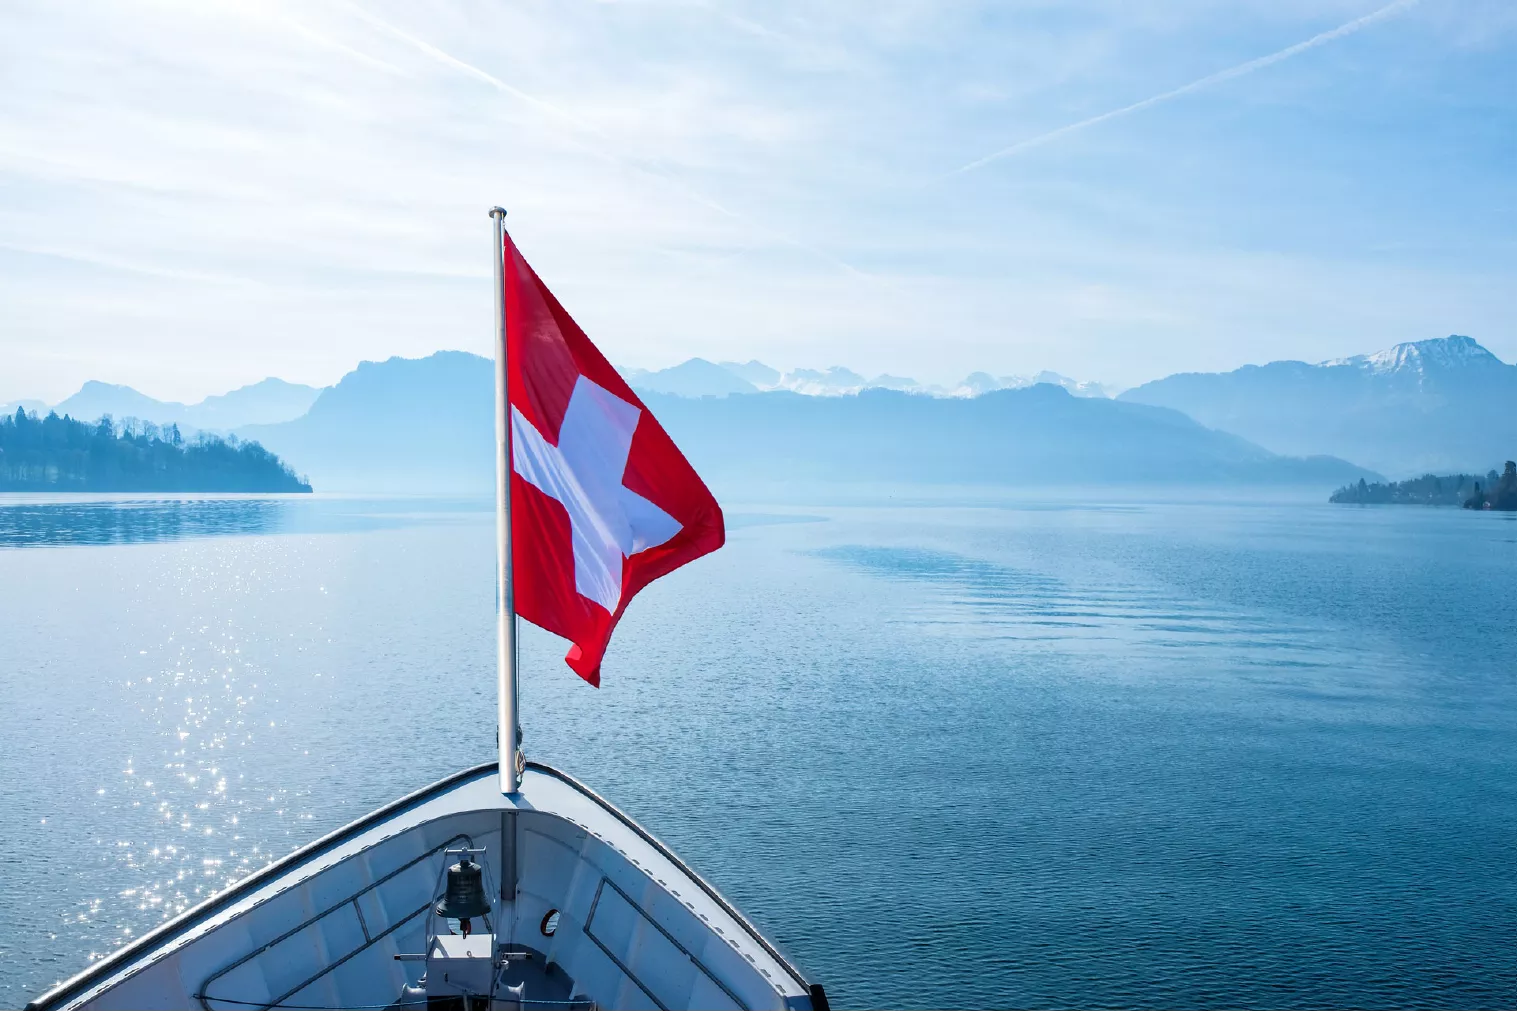 Boat-trip-on-Lake-Lucerne-to-the-train-station-of-Mount-Rigi-Switzerland